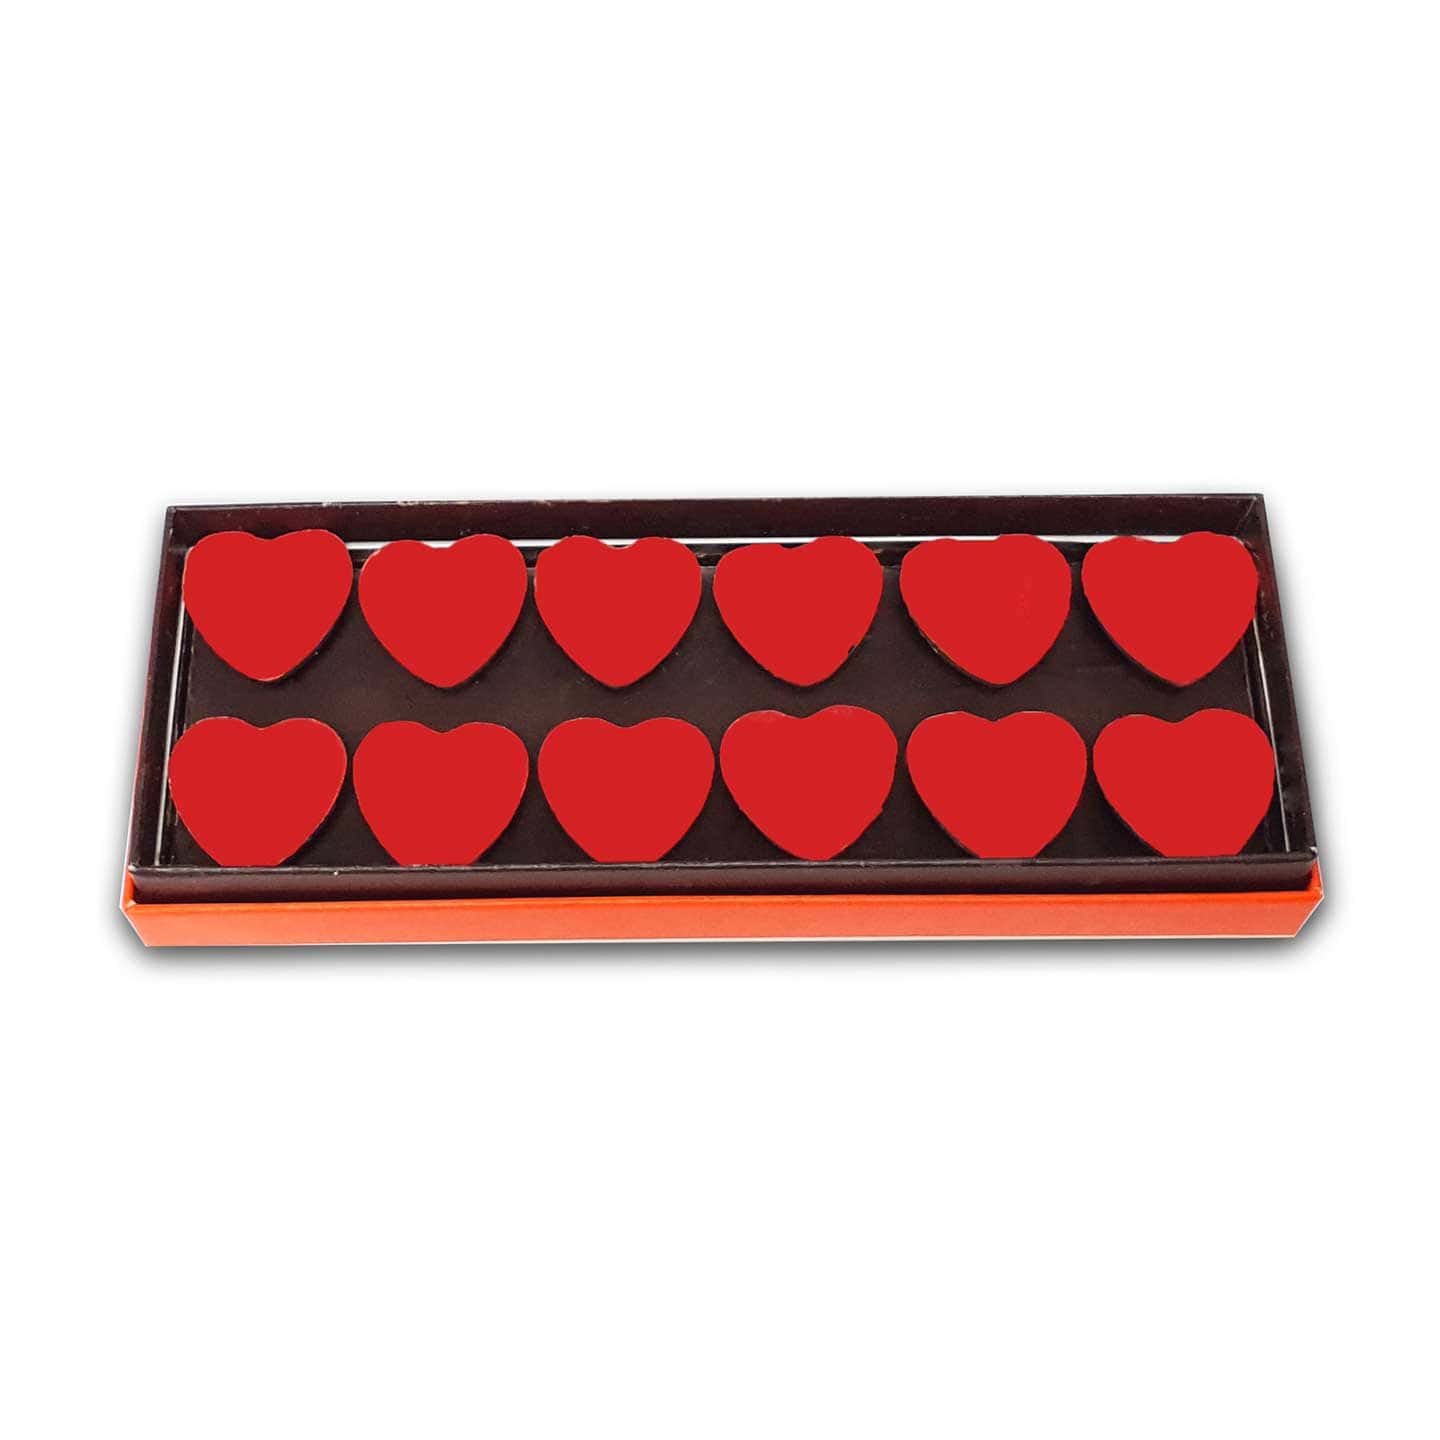 Petits Coeurs Chocolat Lait Gianduja Feuilletine Saint Valentin 140g - 12 pièces